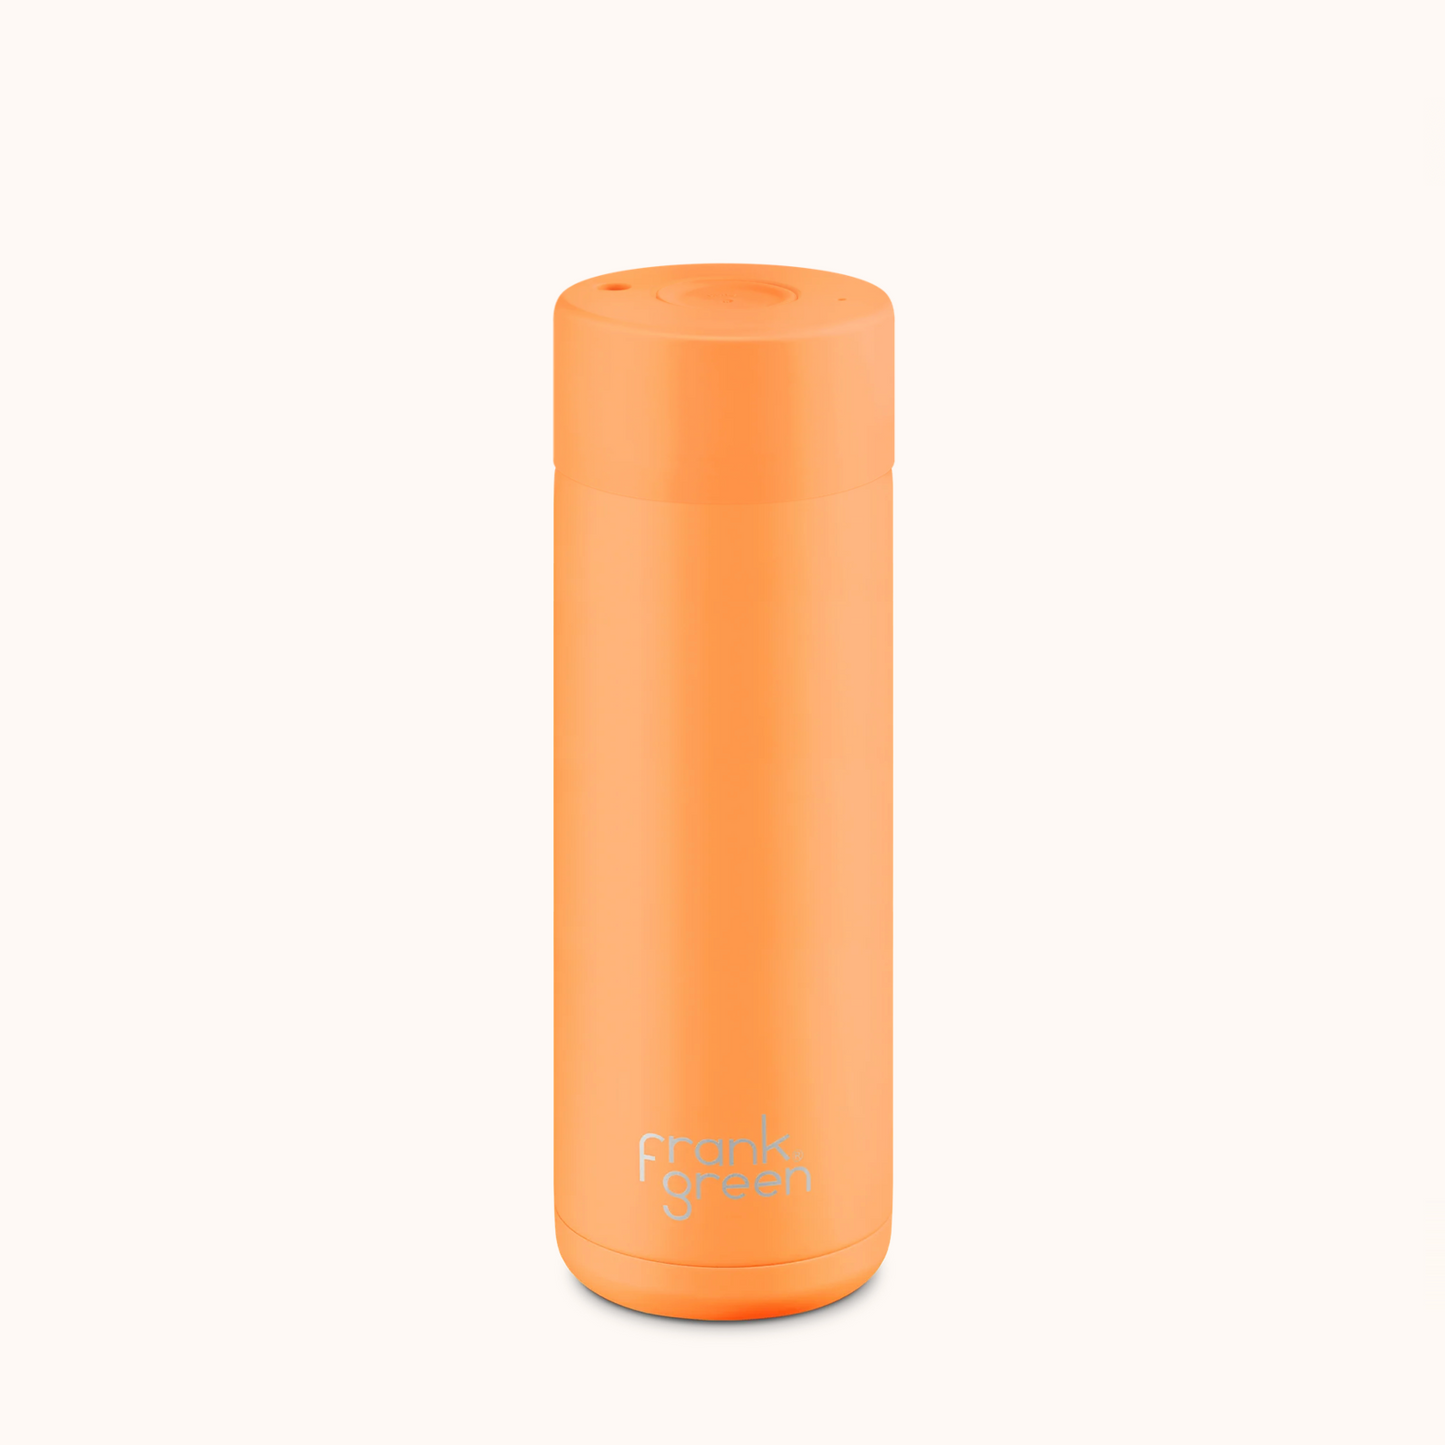 Frank Green Ceramic Reusable Bottle 20oz, Neon Orange